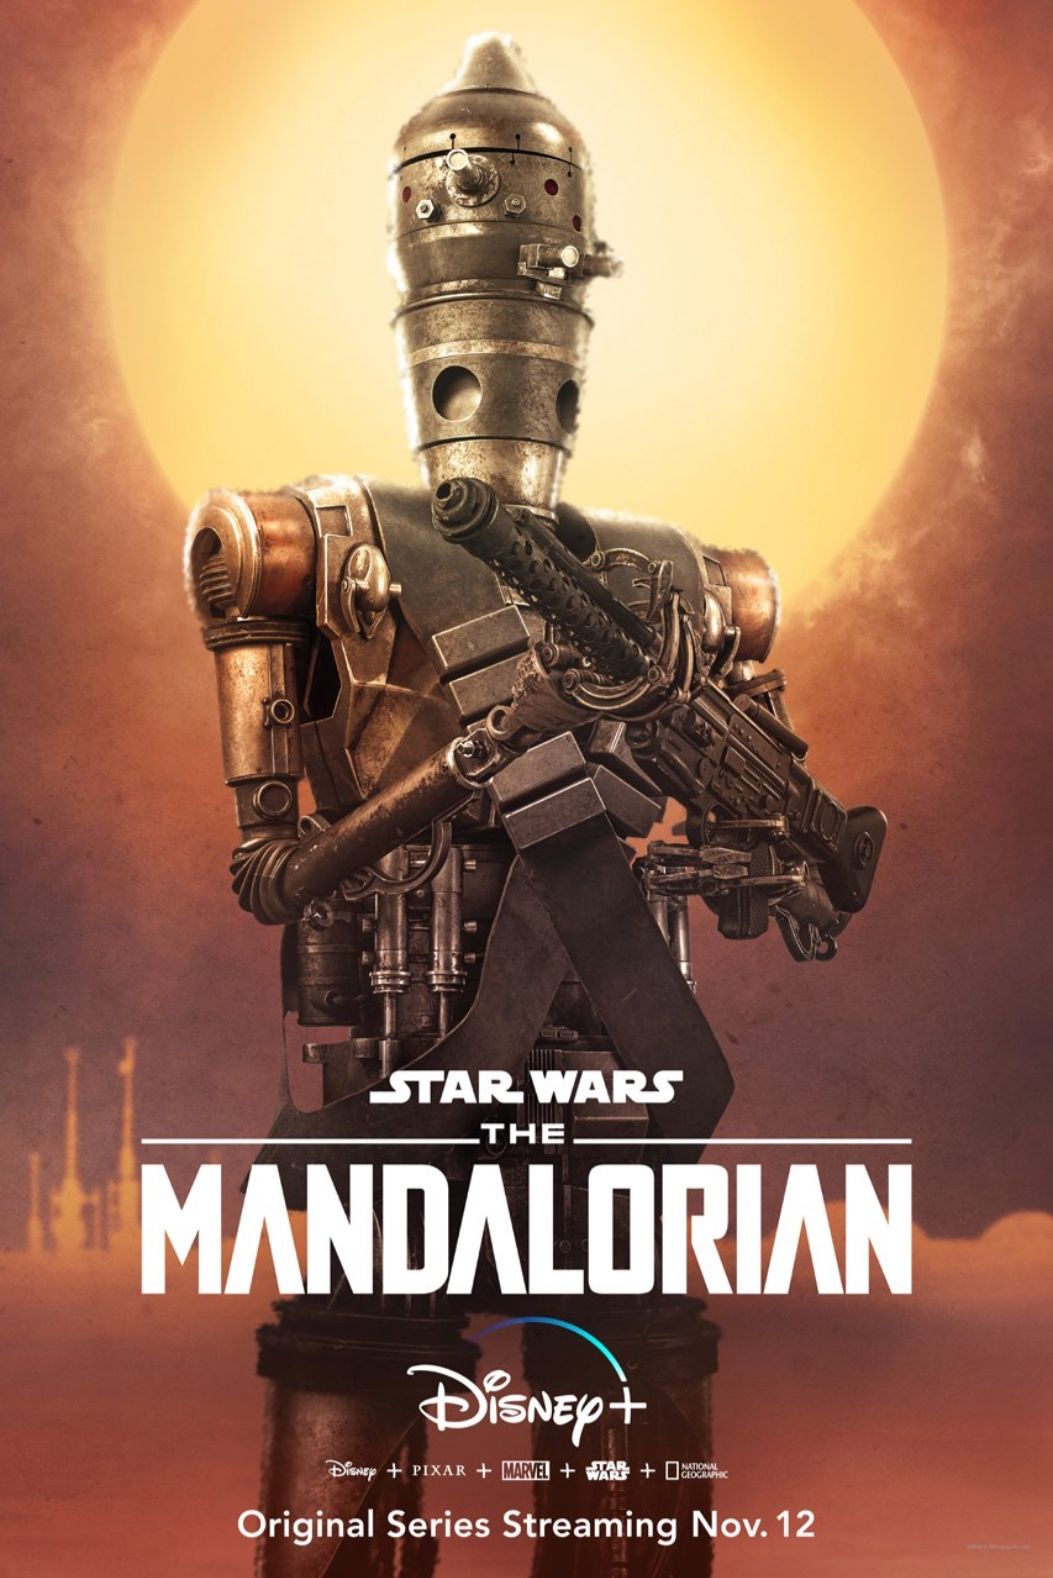 The Mandalorian Character Poster #4